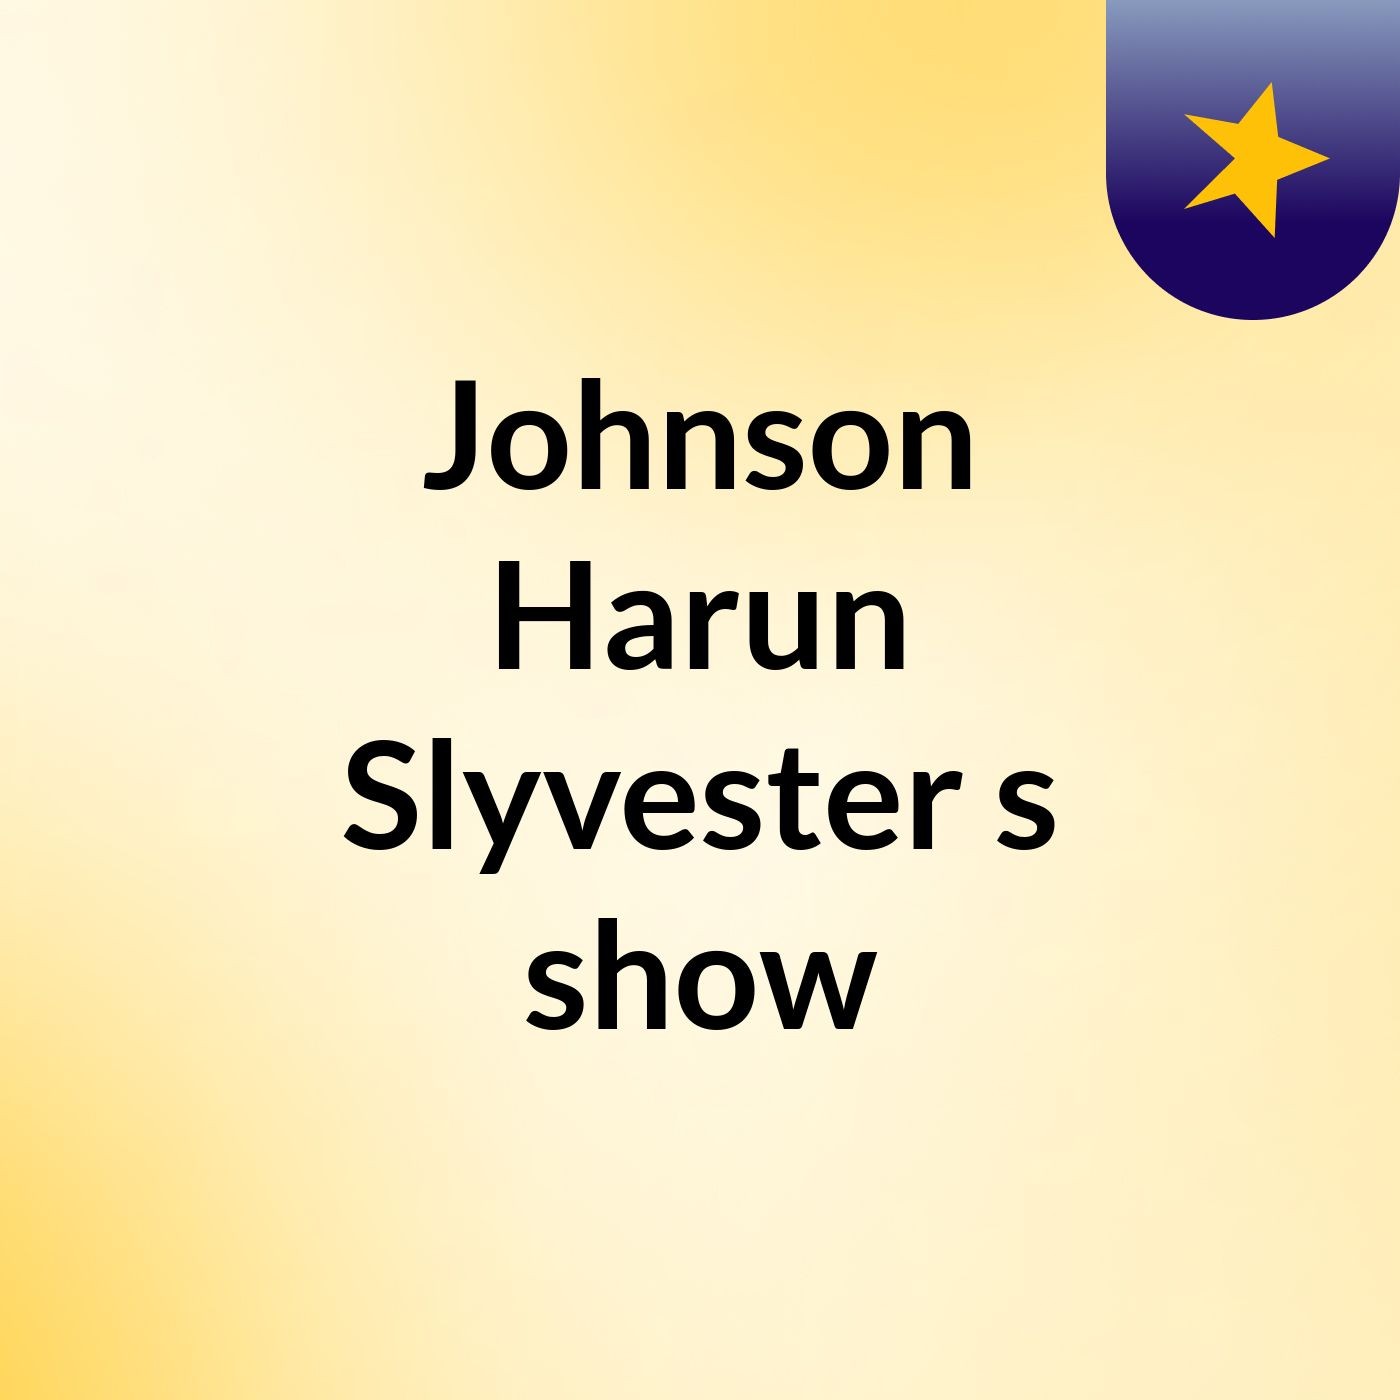 Johnson Harun Slyvester's show